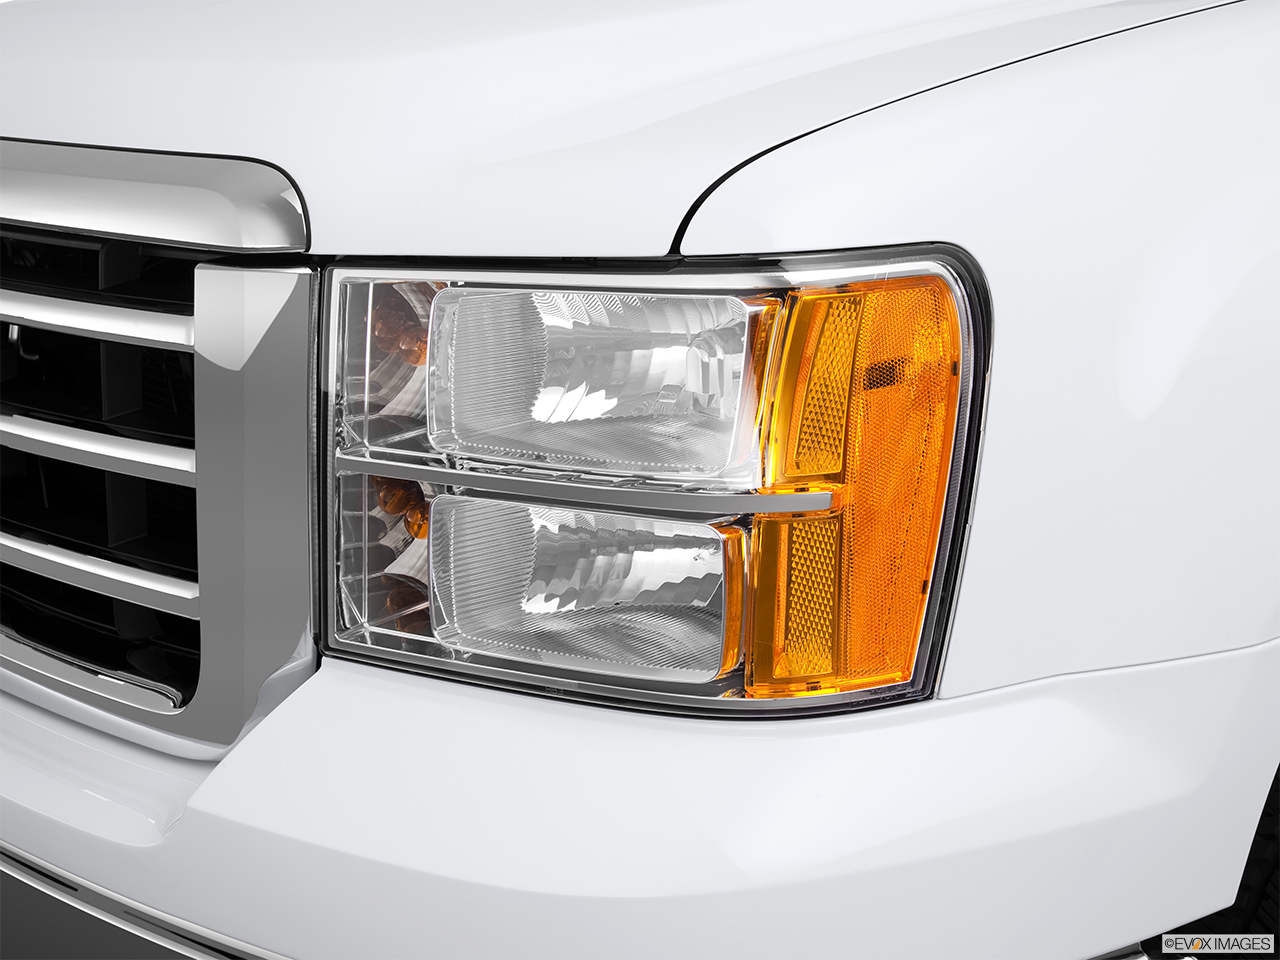 2013 GMC Sierra 1500 Hybrid 3HA Drivers Side Headlight. 